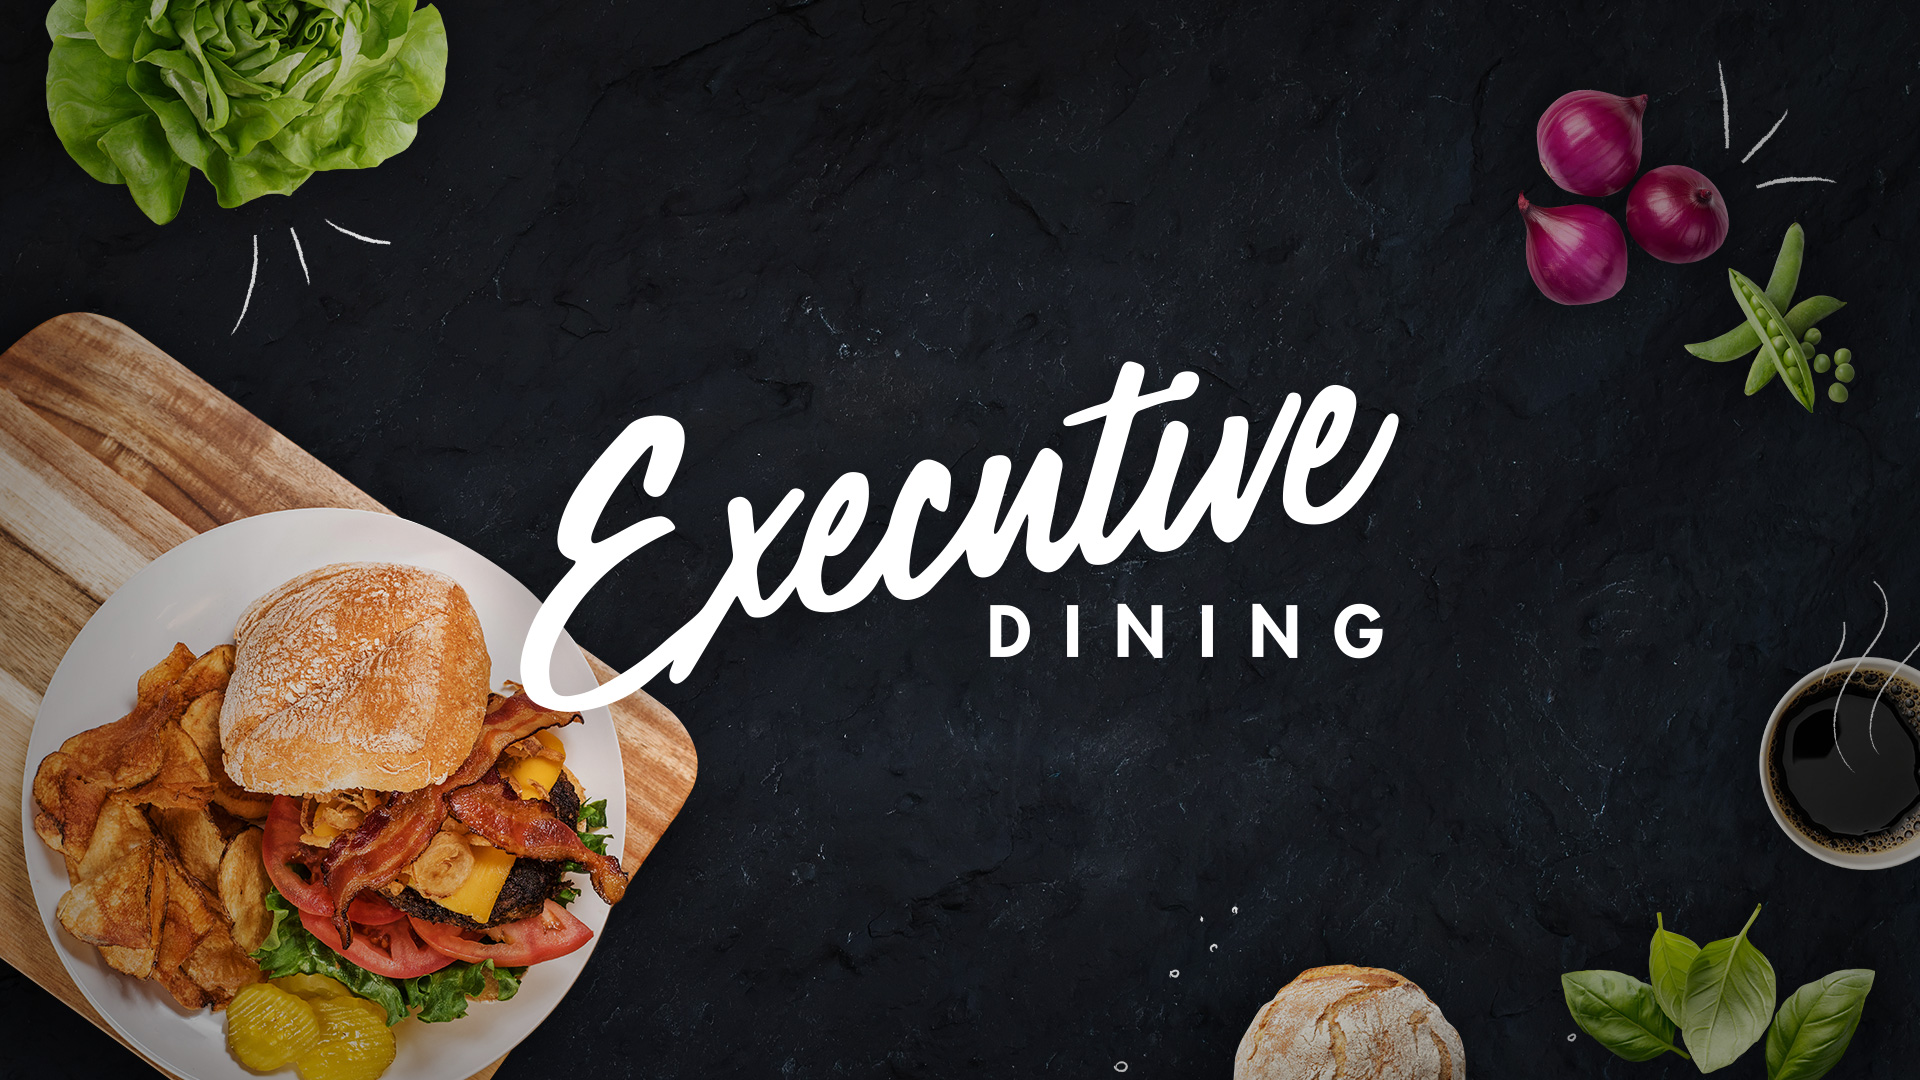 Executive Dining Branding & Design